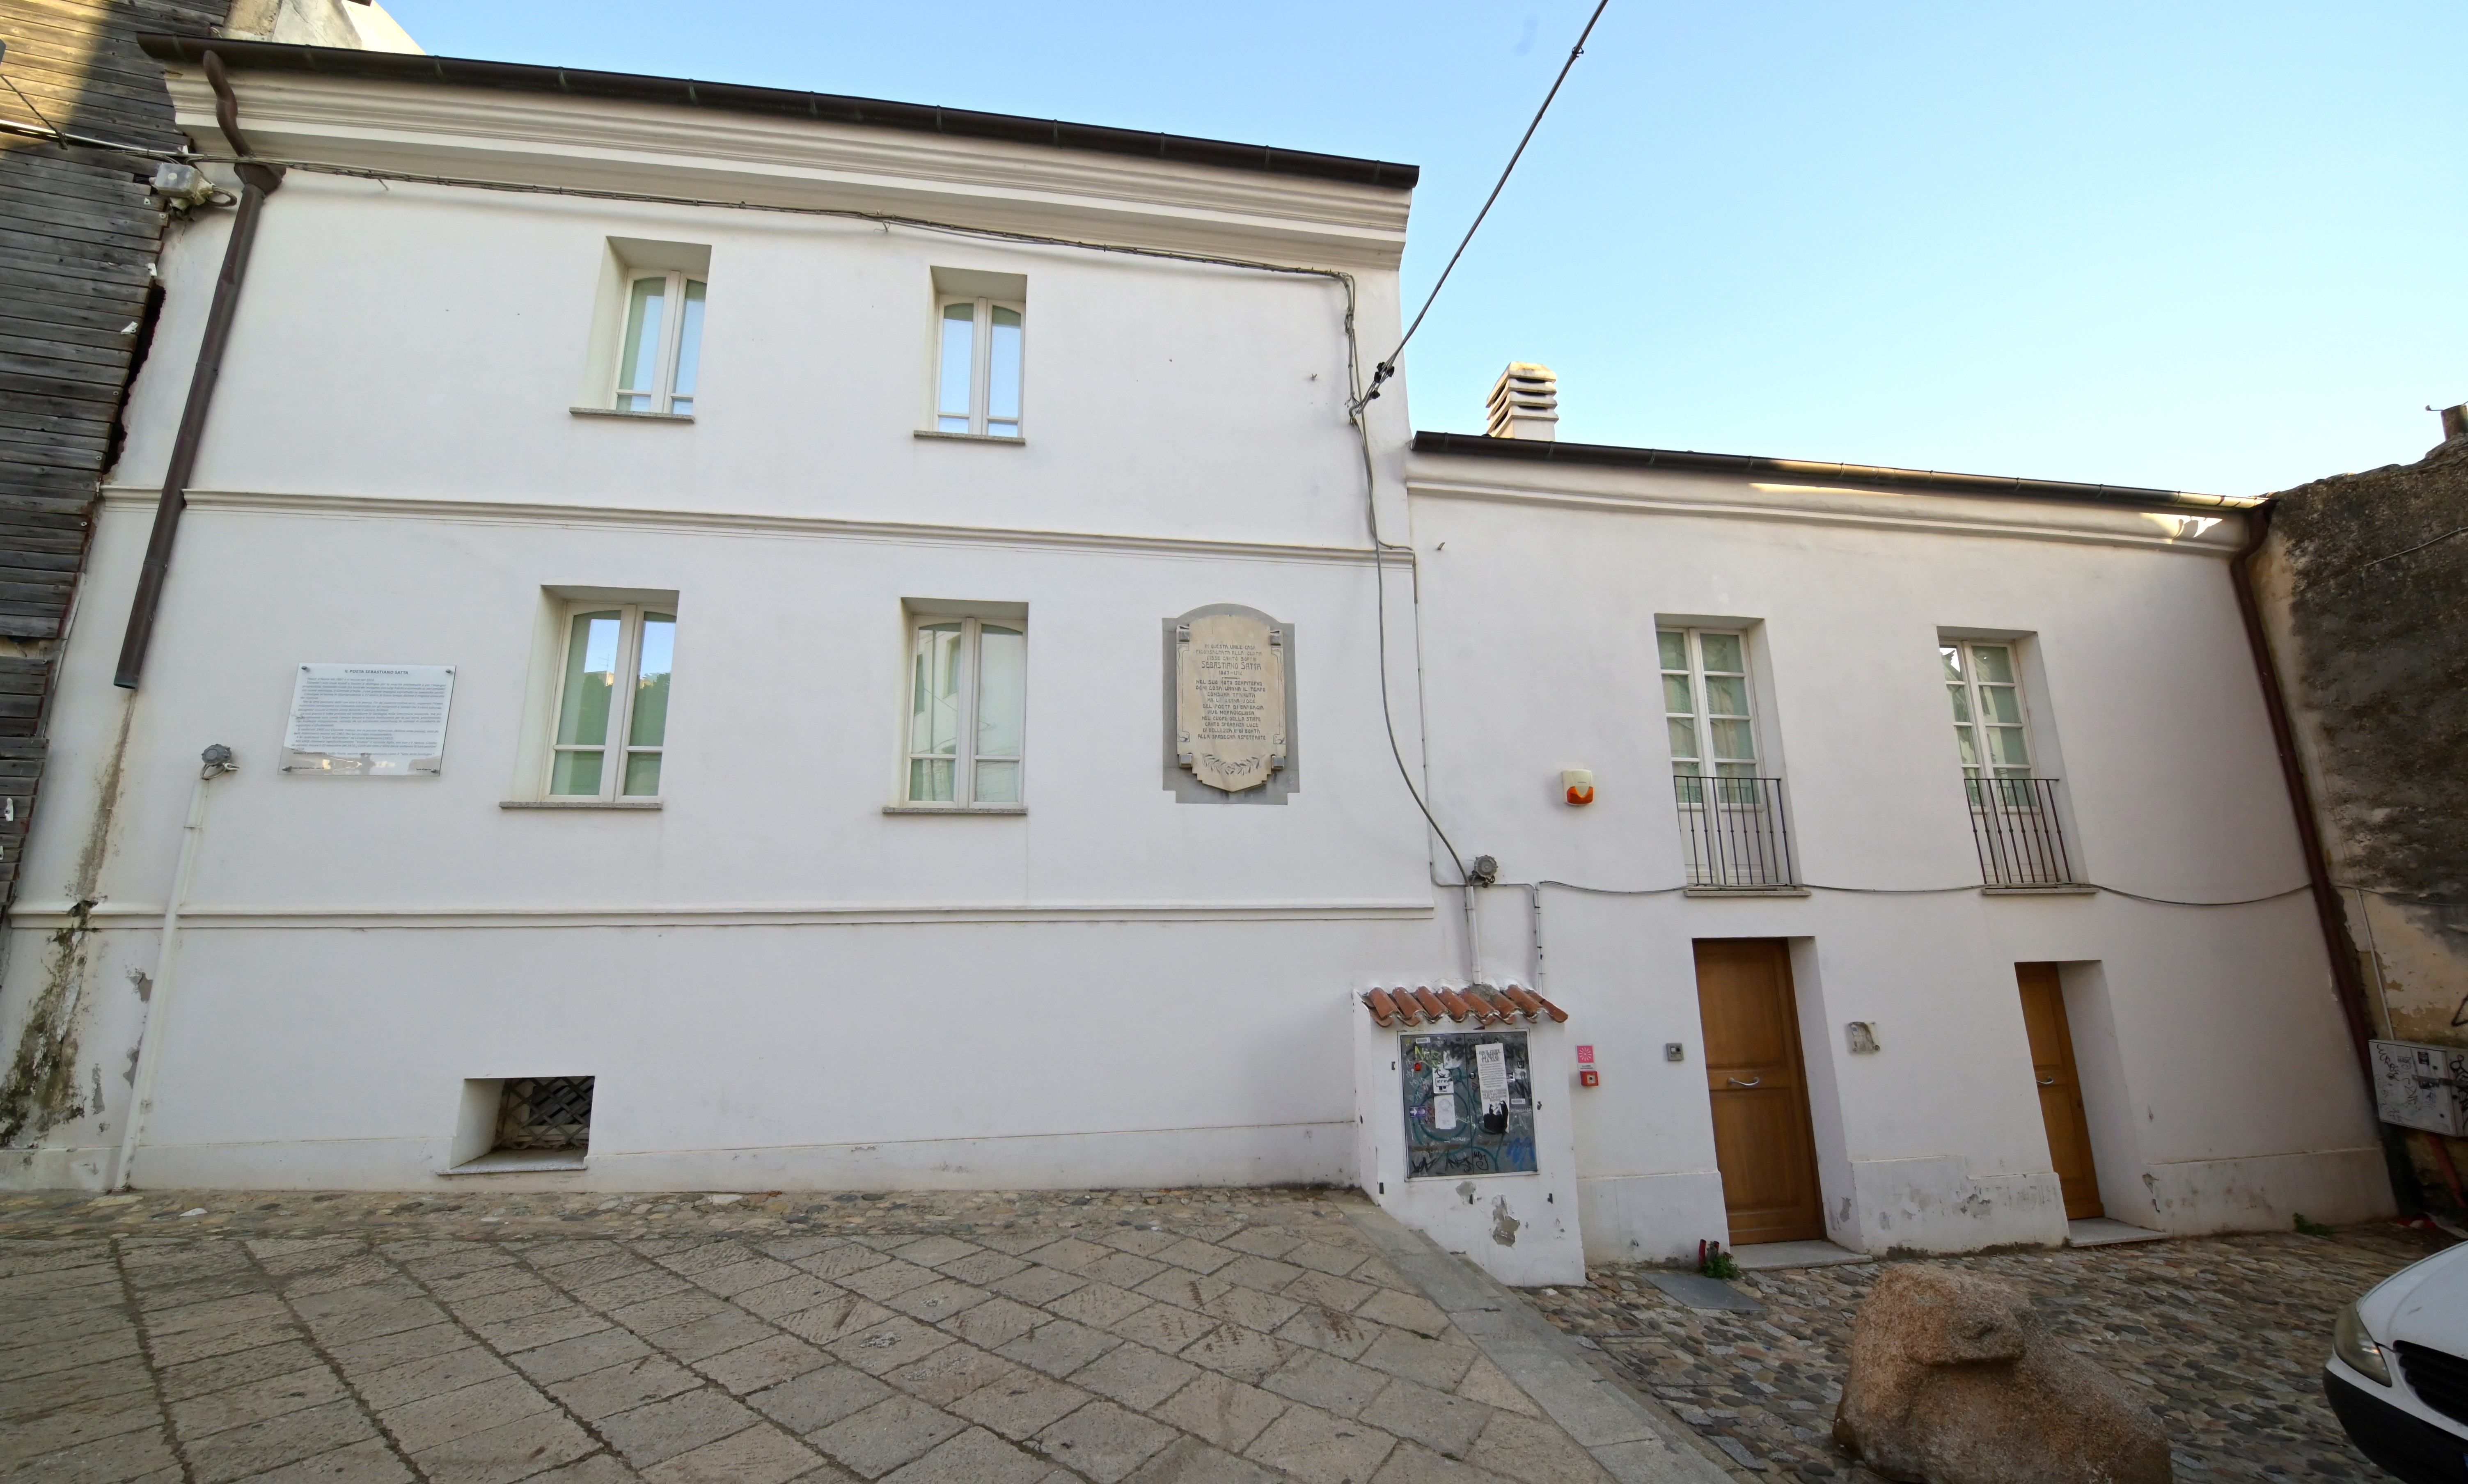 Casa del poeta sebastiano satta (casa, padronale)